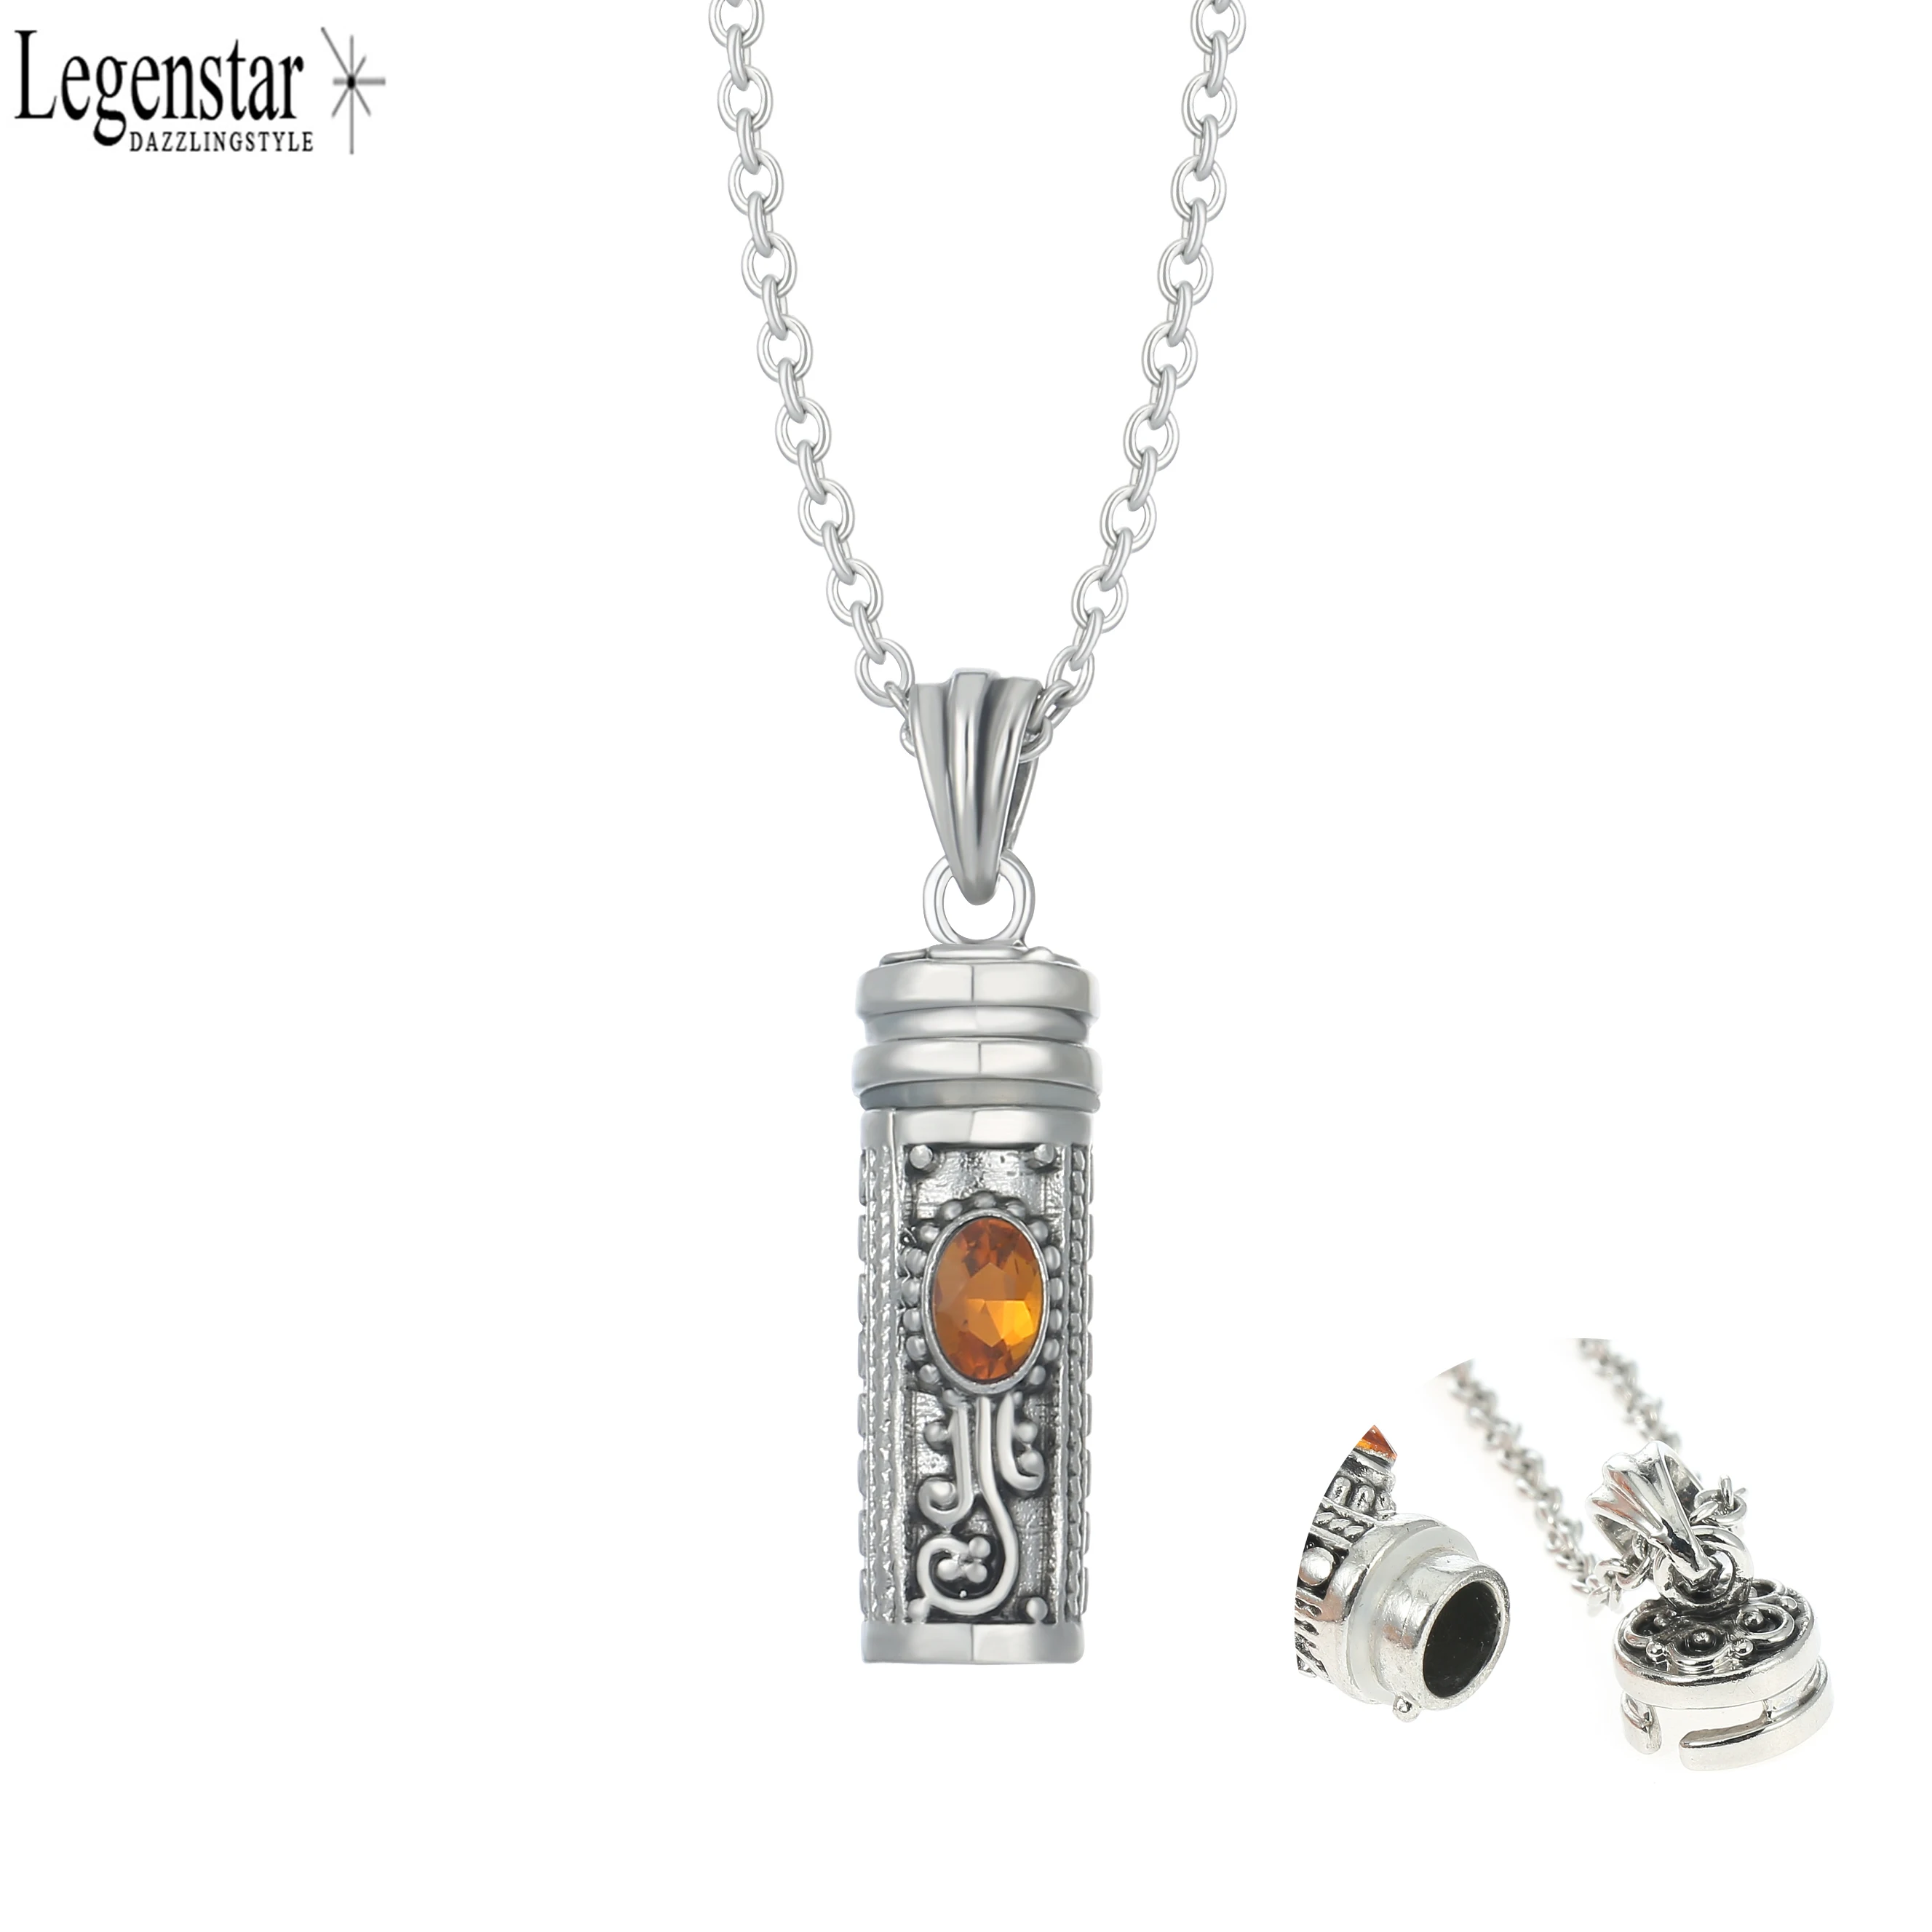 Legenstar Perfume Bottle Pendant Necklace Memorial Ash Keepsake with Birthstones Diffuser Locket Lover Necklace for Women Gift